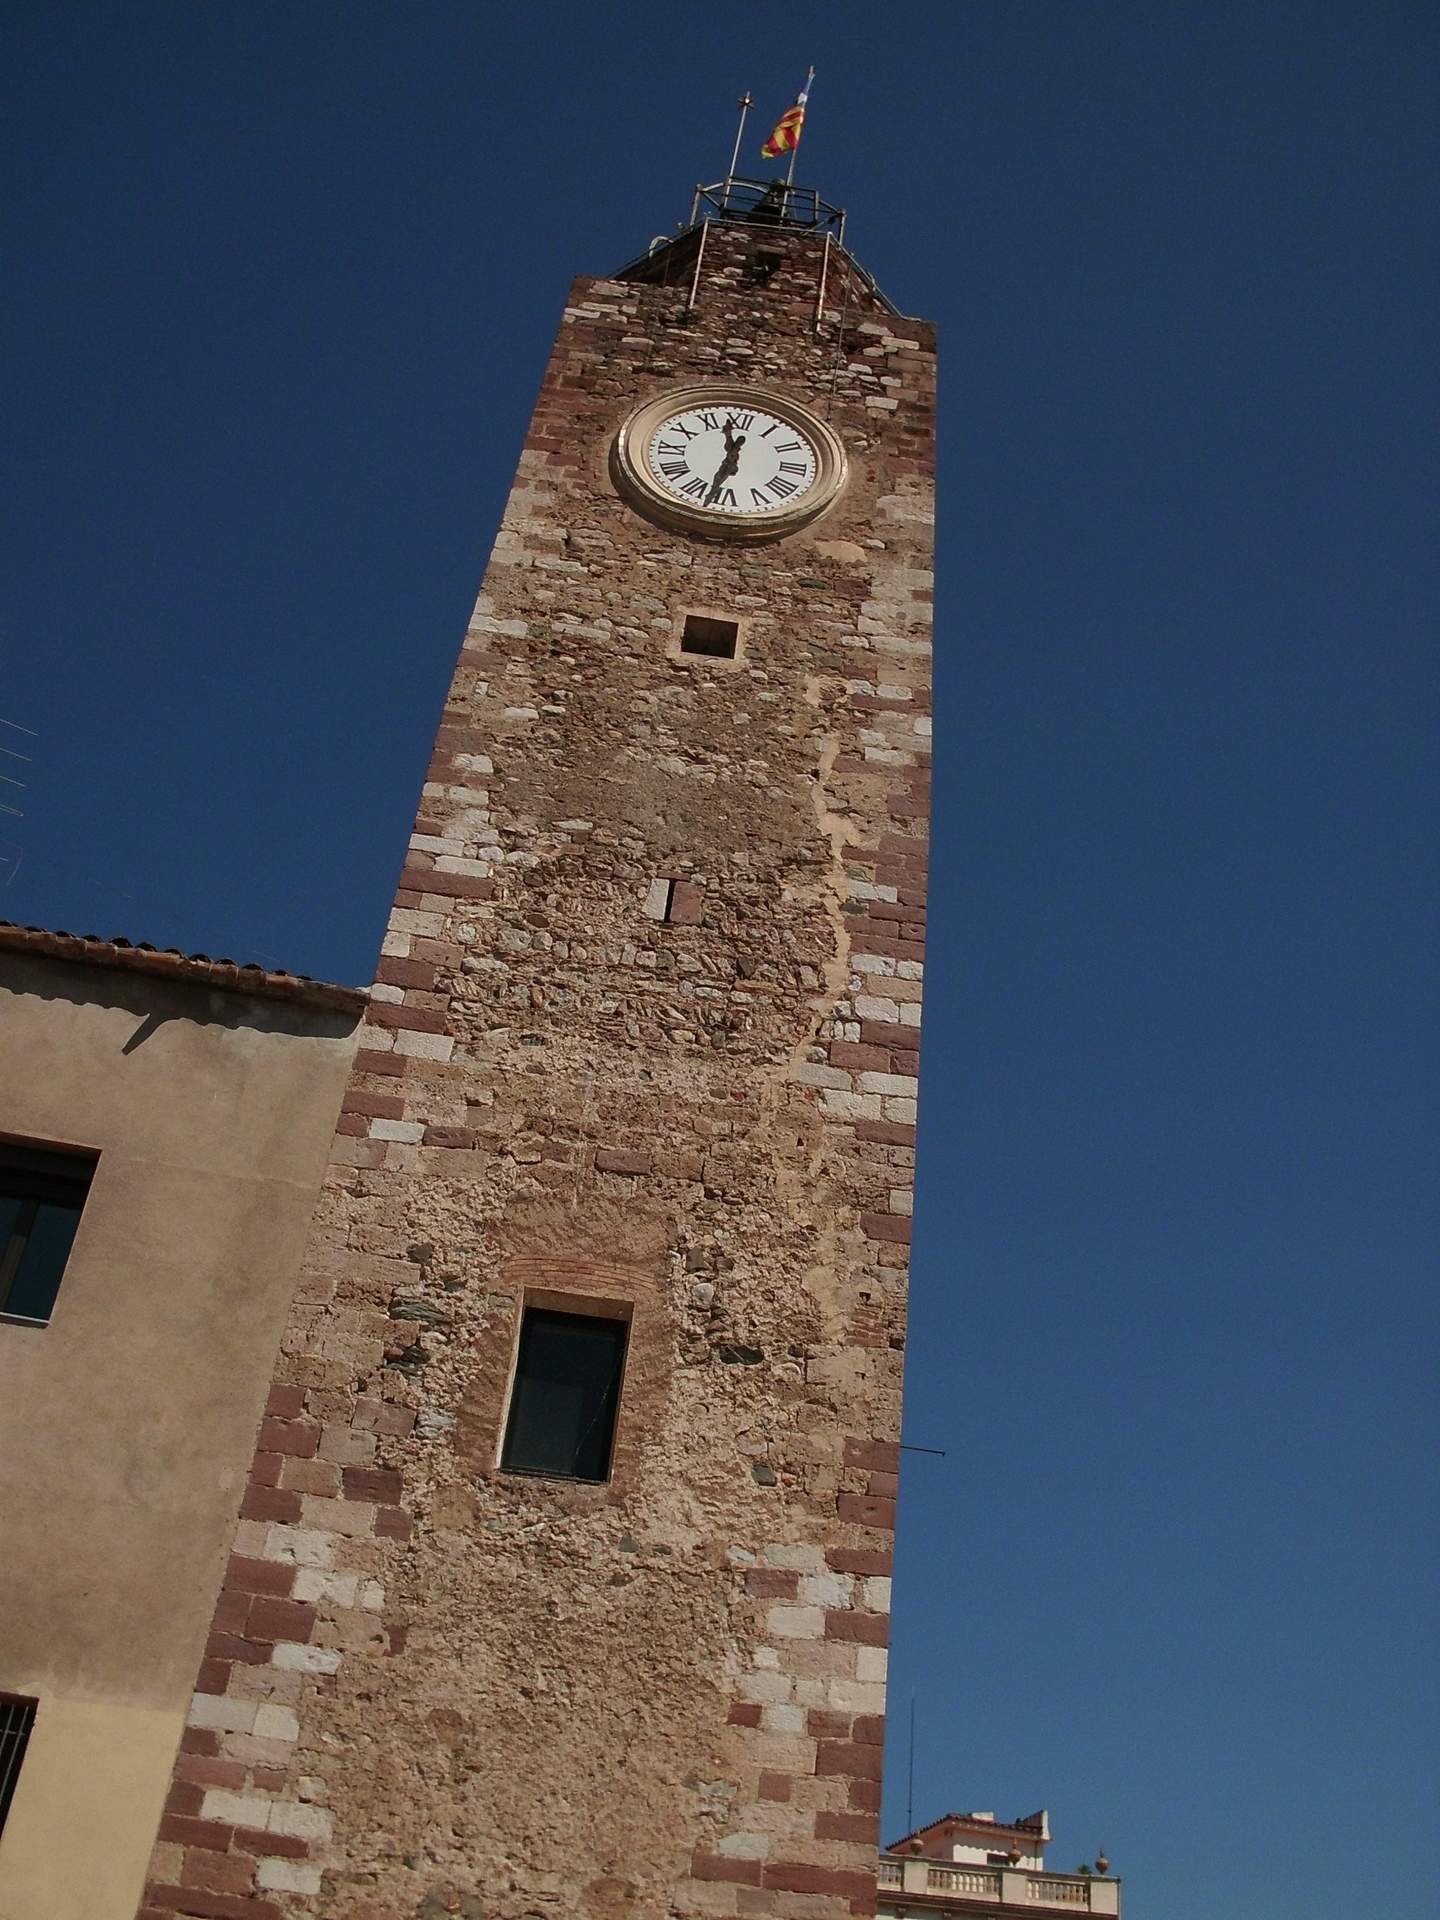 La torre del reloj en Olesa de Montserrat, Fuente |Wikipedia Commmons.